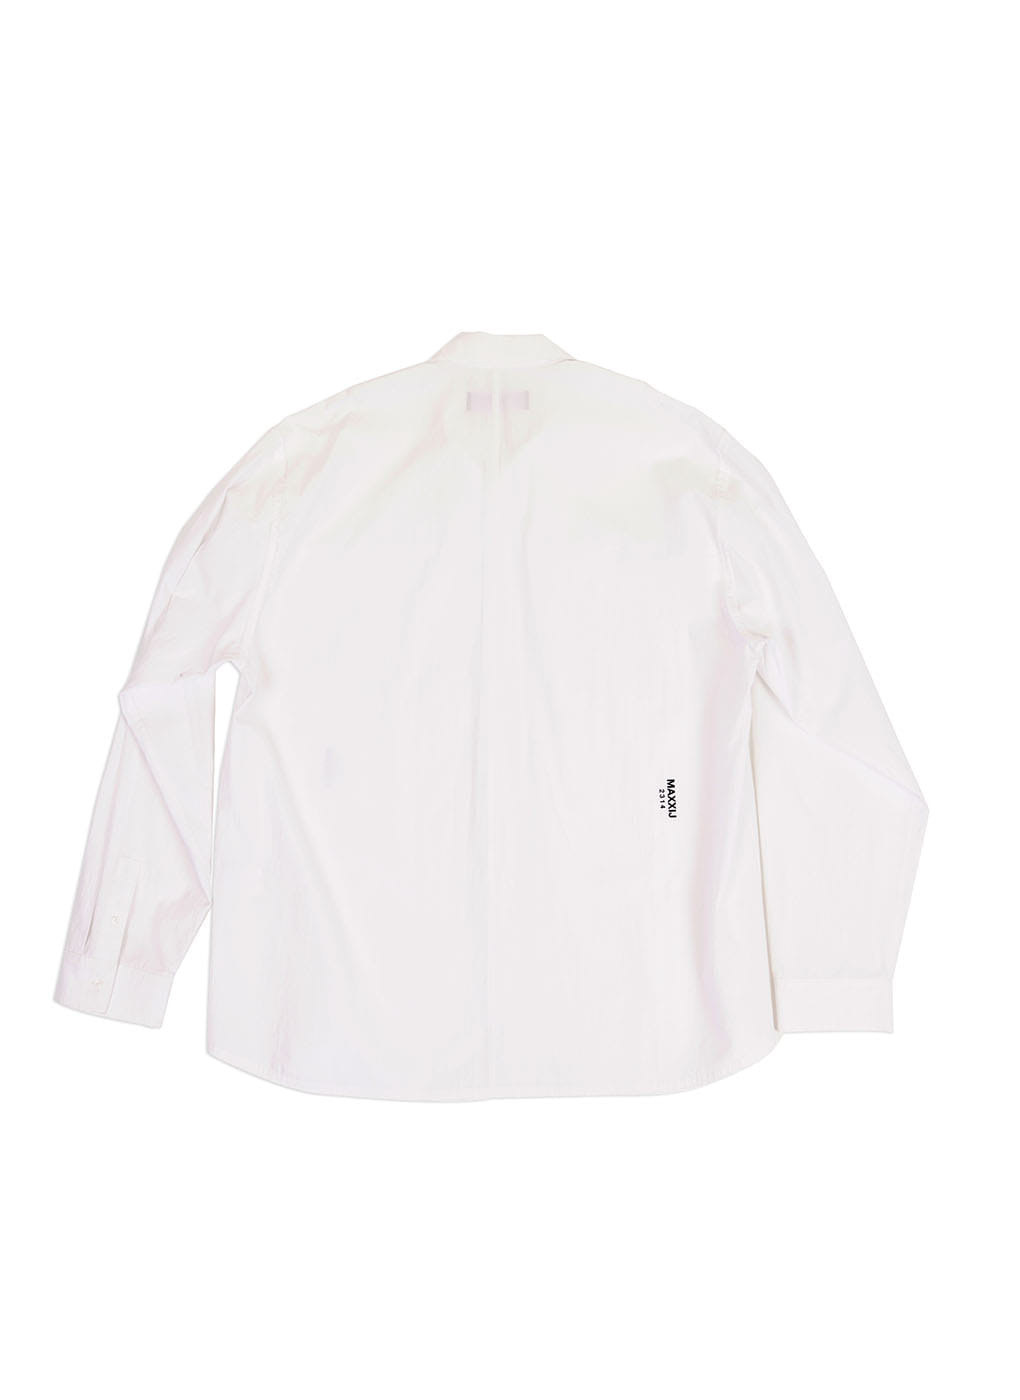 White Military Button Down Oxford Shirt